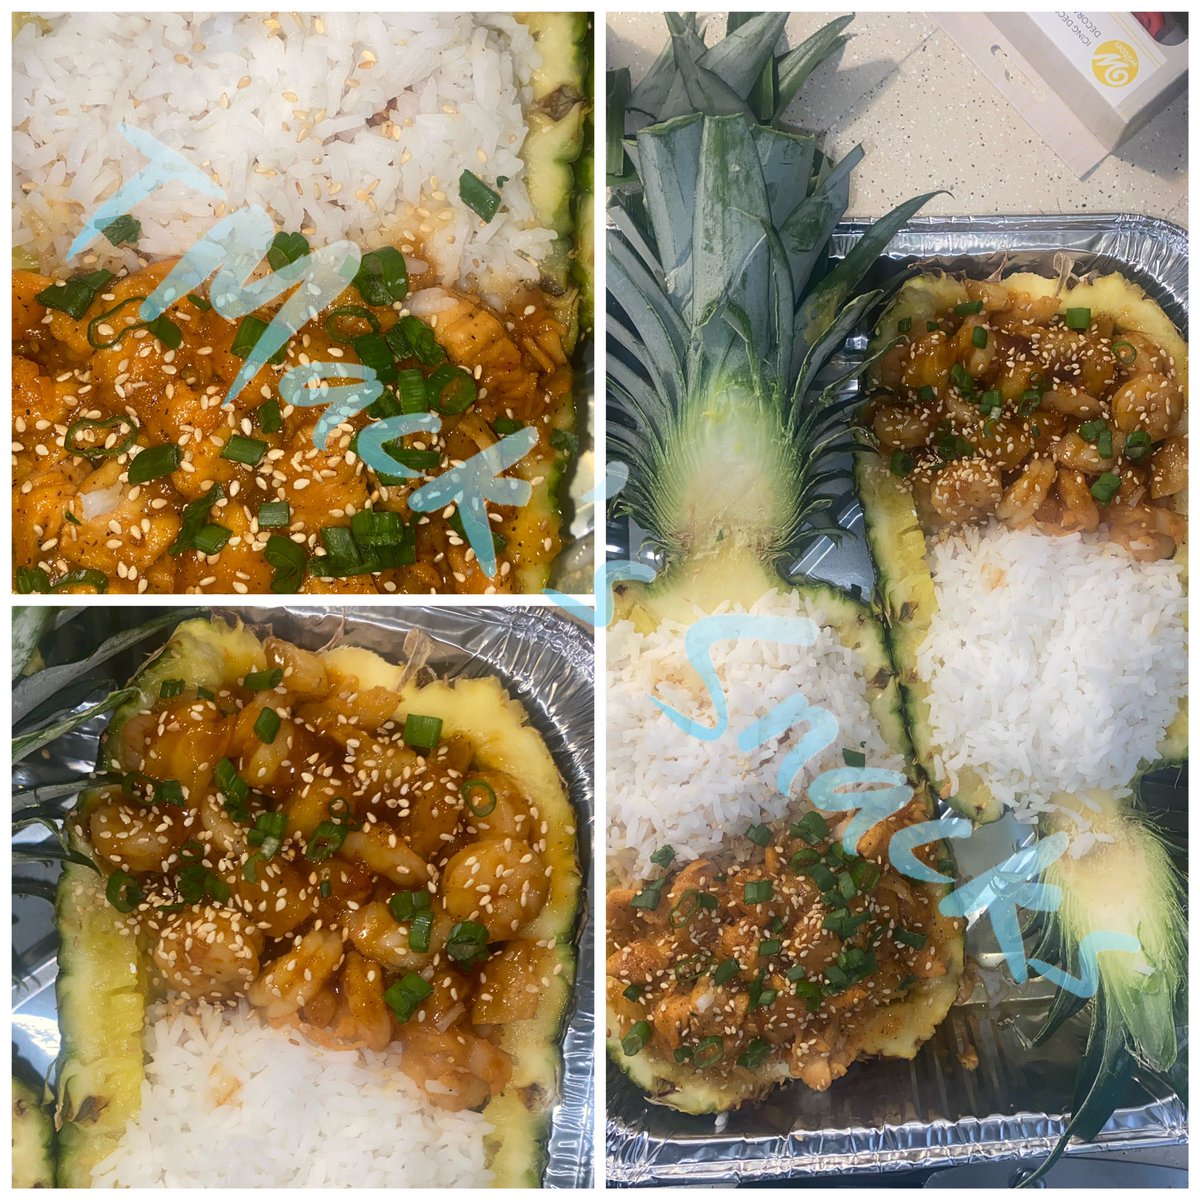 Chicken and shrimp pineapple bowls #Atlanta #ATL #Dessert #Food #Homemade #bake #cook #FromScratch #Fresh #FoodPorn #Entrepreneur #BlackOwnedBusiness #HomeBusiness #blackexcellence #SmallBusinessOwner #SupportBlackBusiness #explorepage #chef